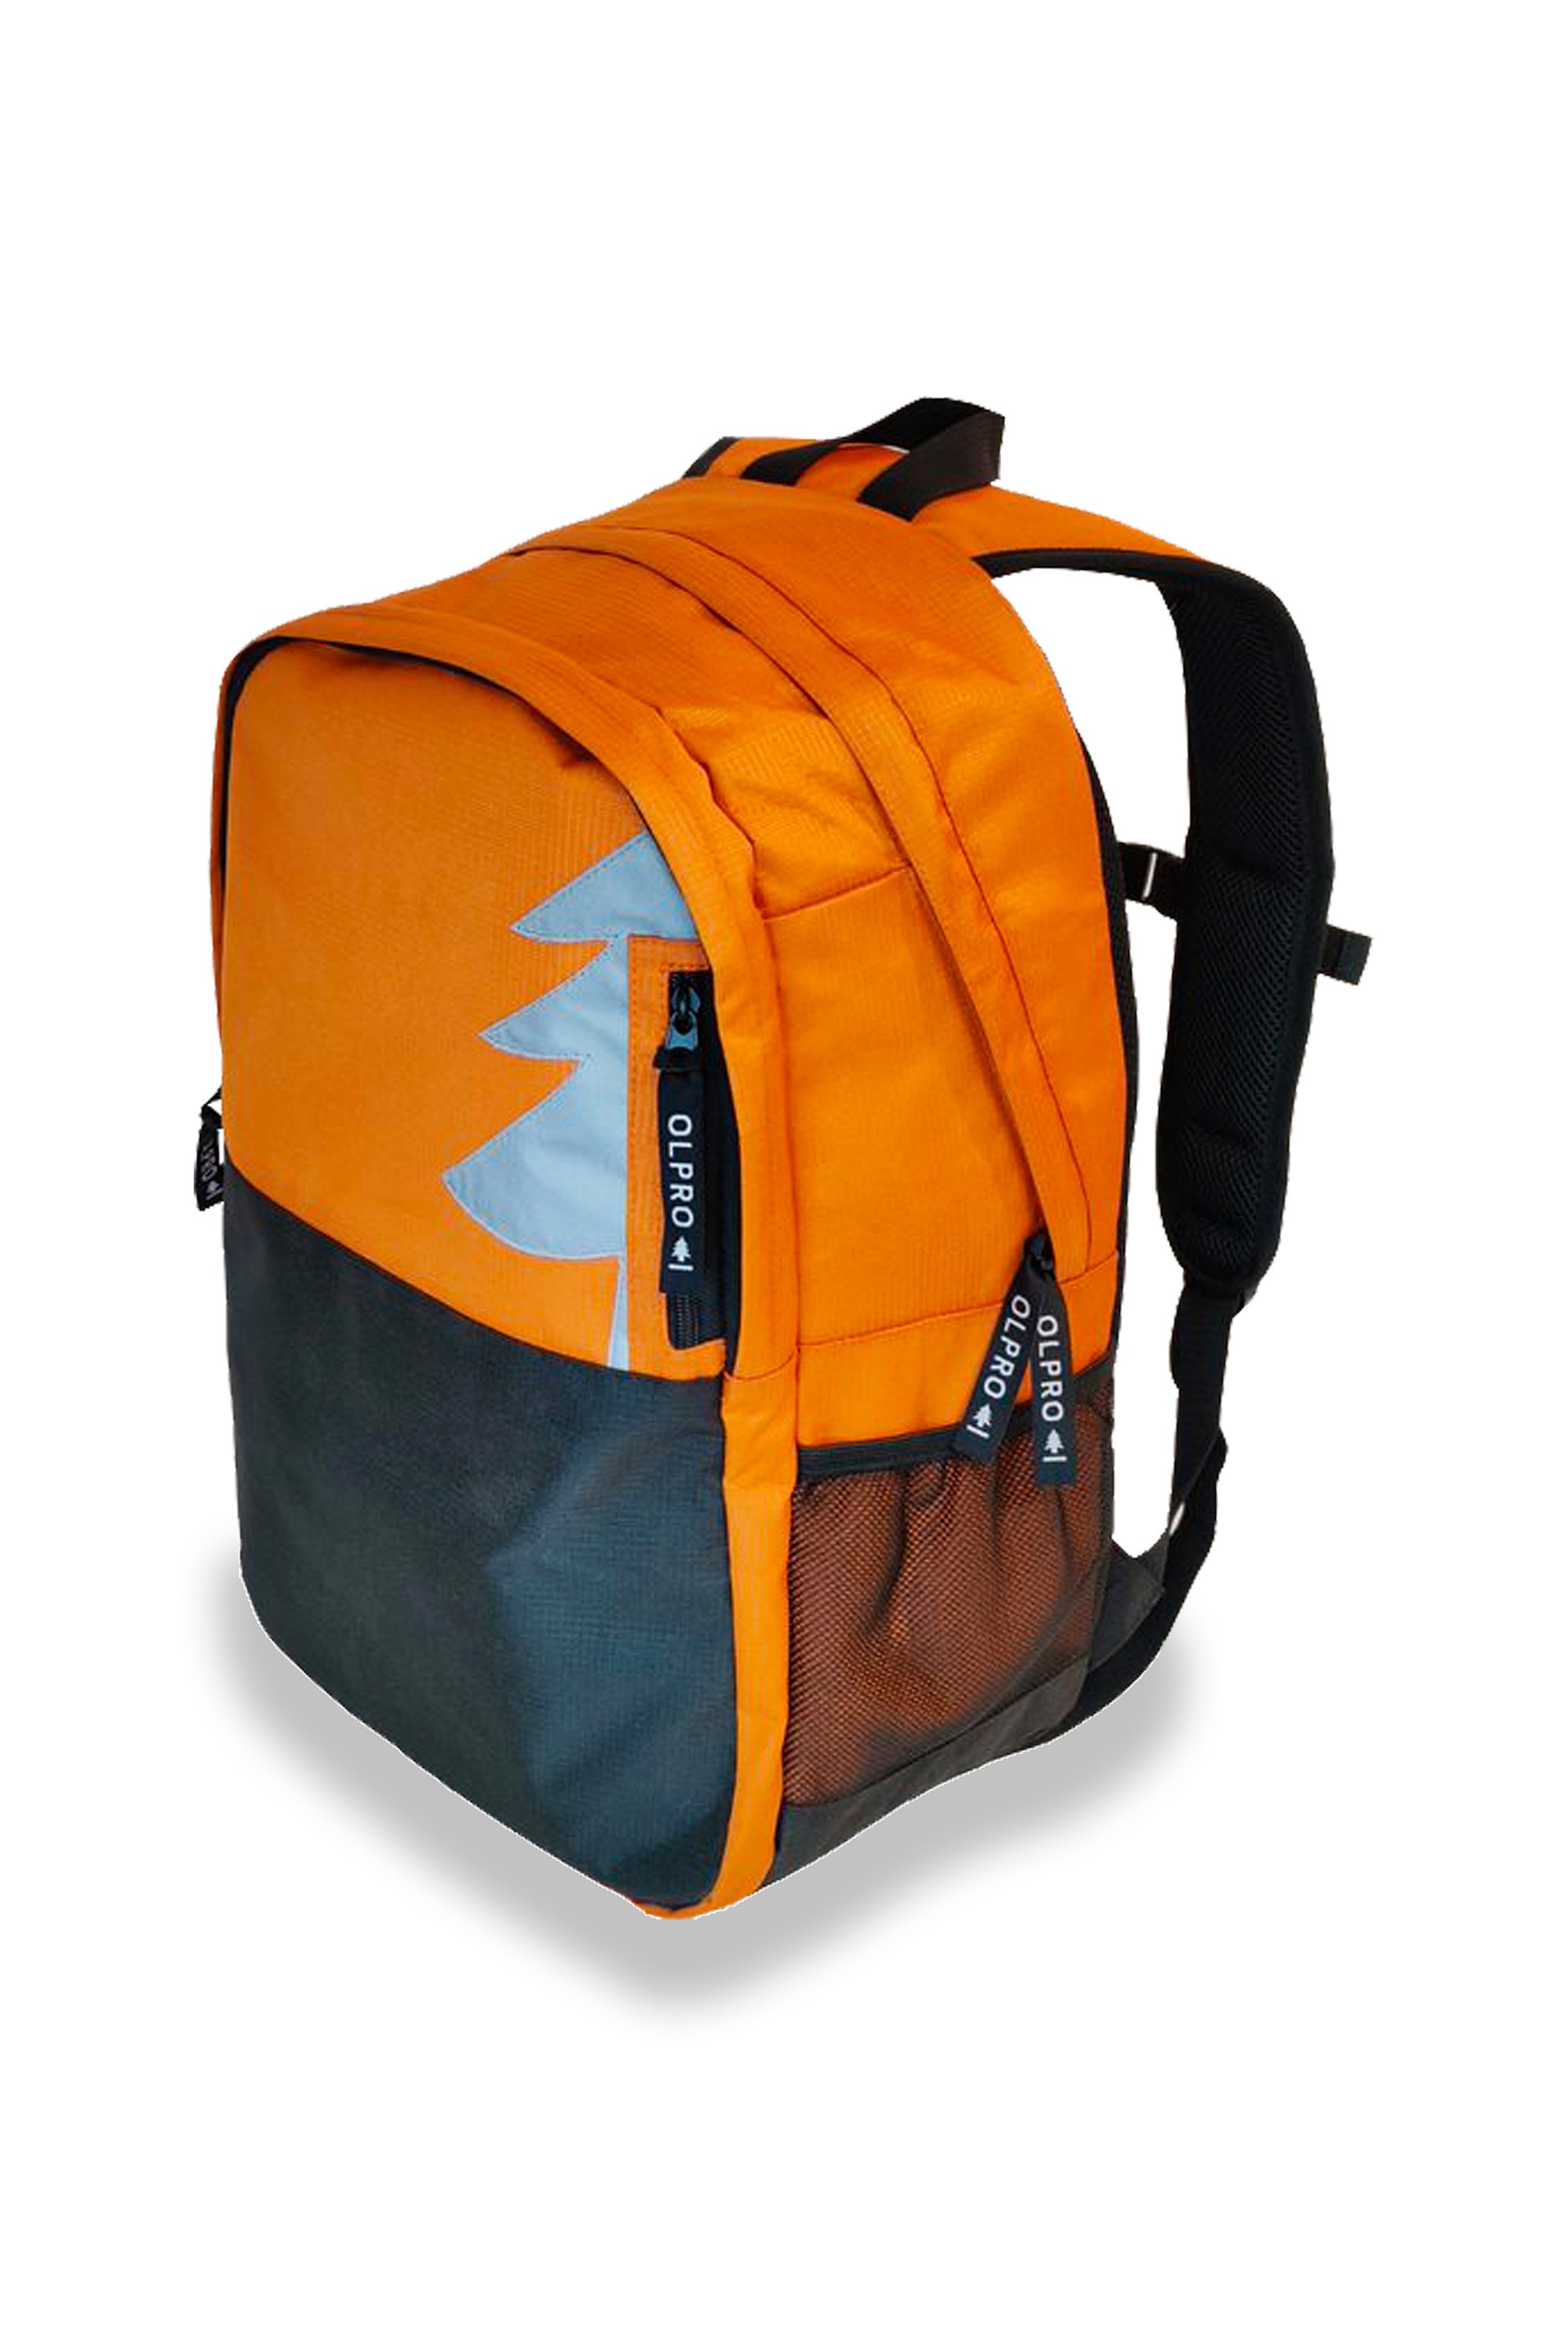 28L Daysac Backpack -